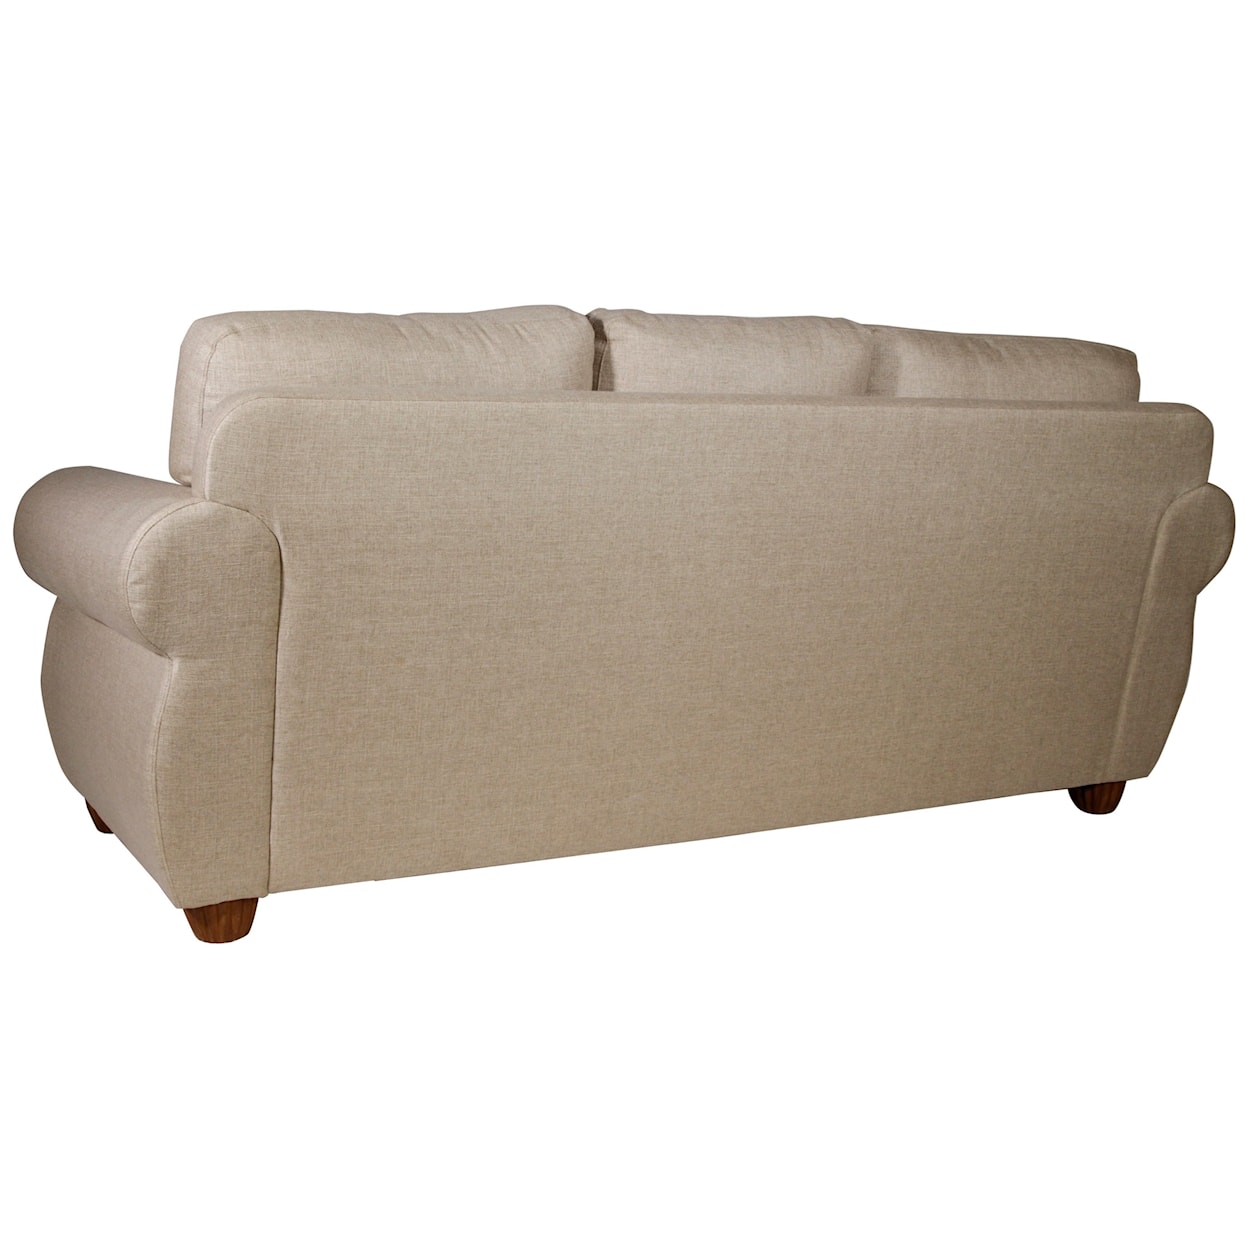 Sarah Randolph Designs 1374 Sofa with Woven Rattan Detail